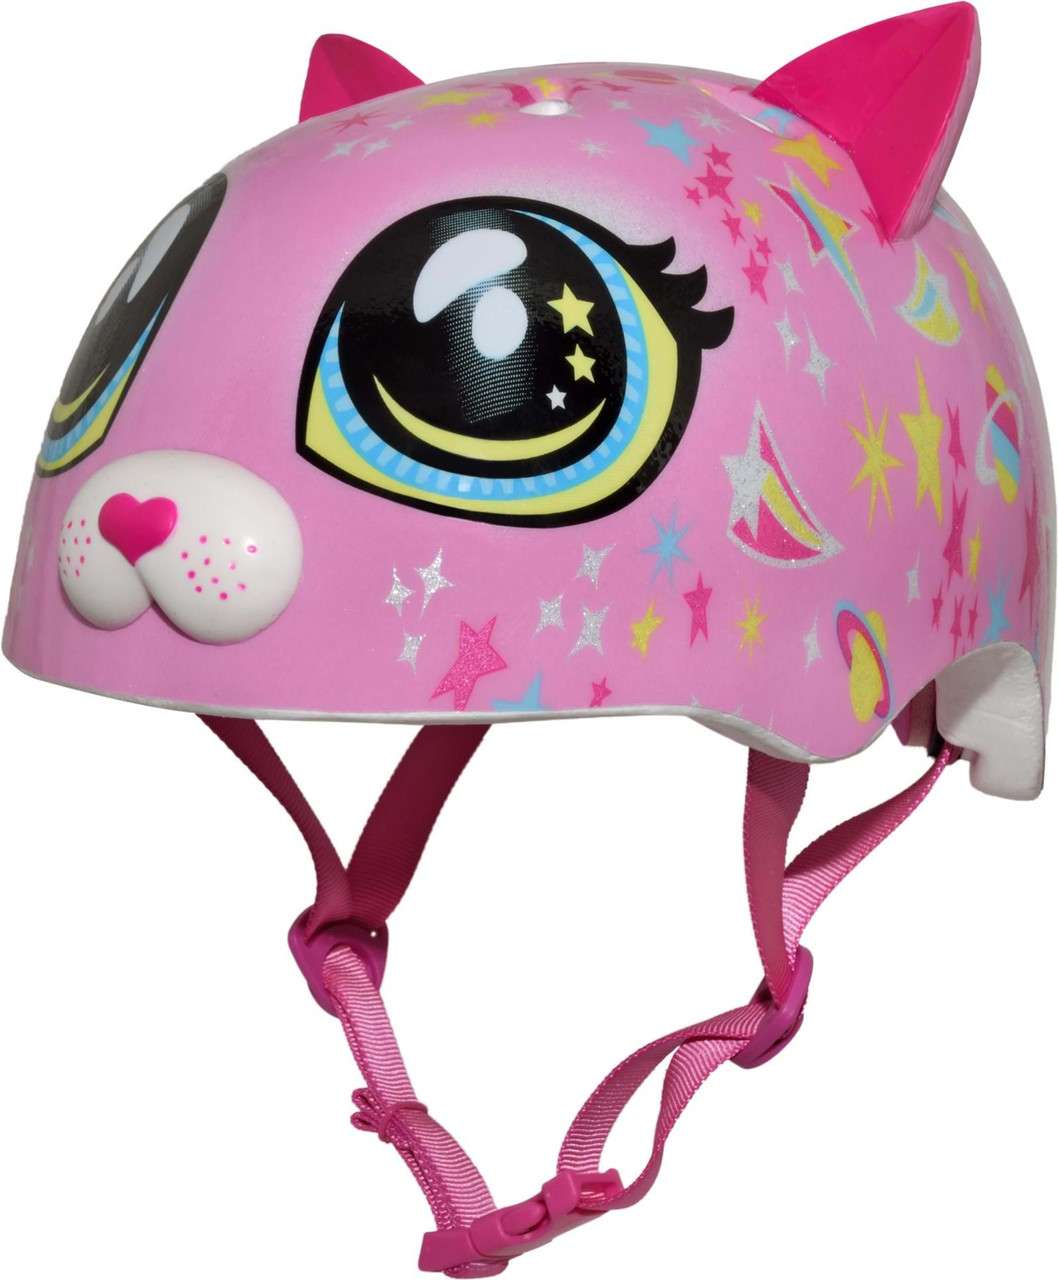 C-PREME RASKULLZ Toddler Helmet 3+ Years Astro Cat Pink Style Size 48-52cm